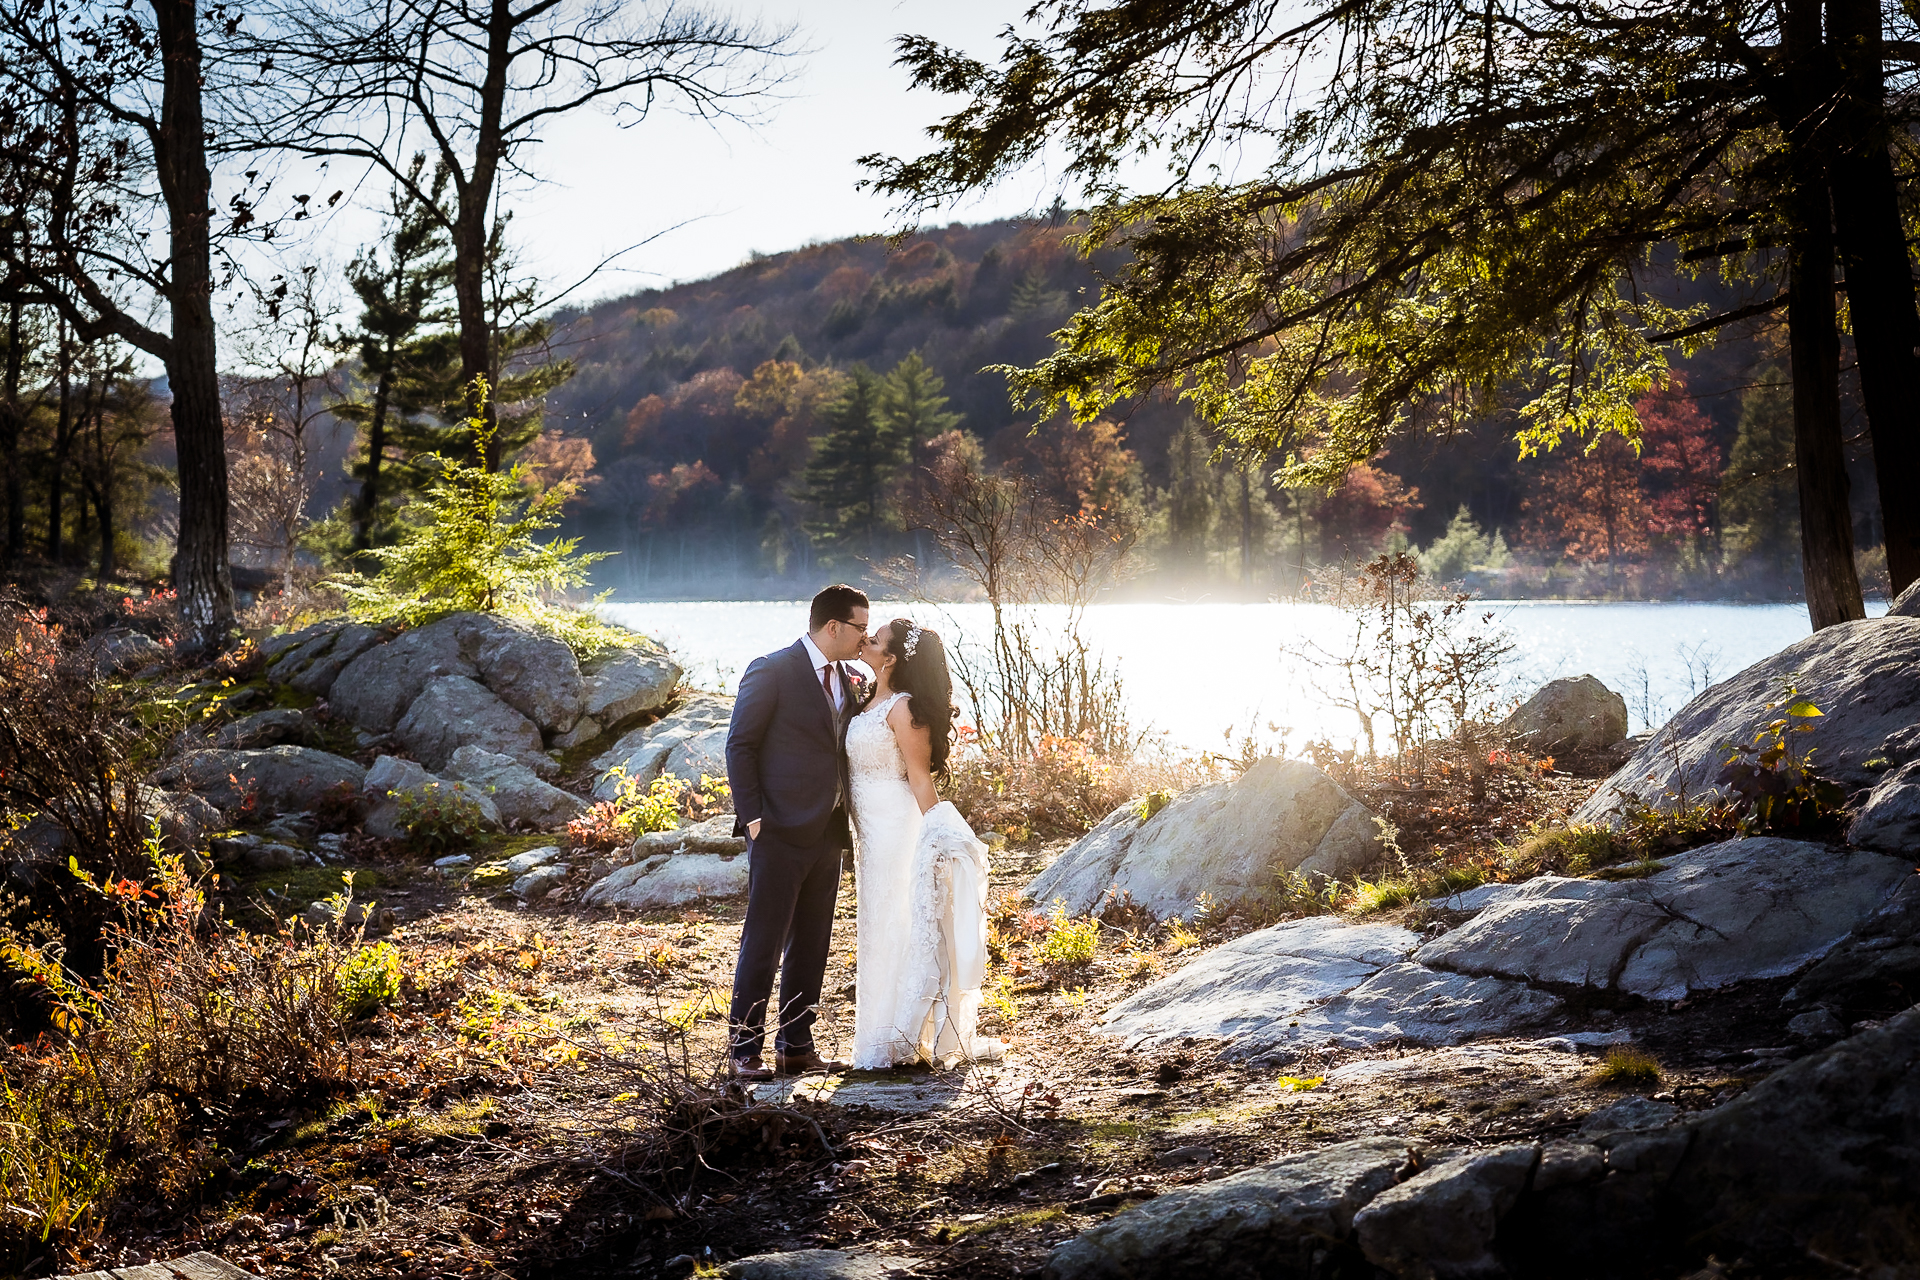 Wedding Photographer Hudson Valley